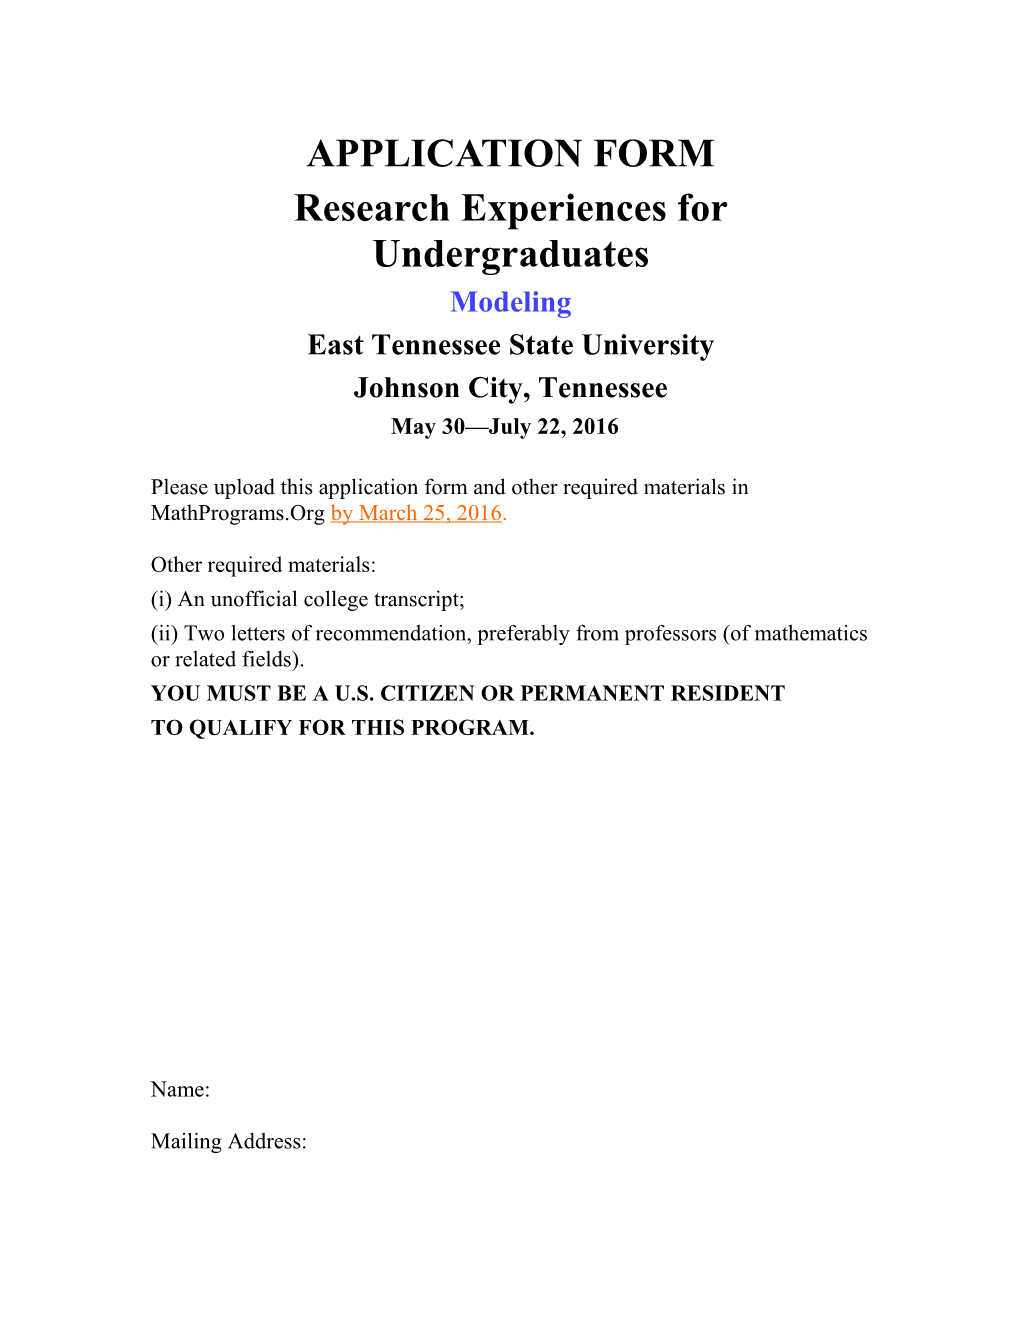 Research Experiences for Undergraduates